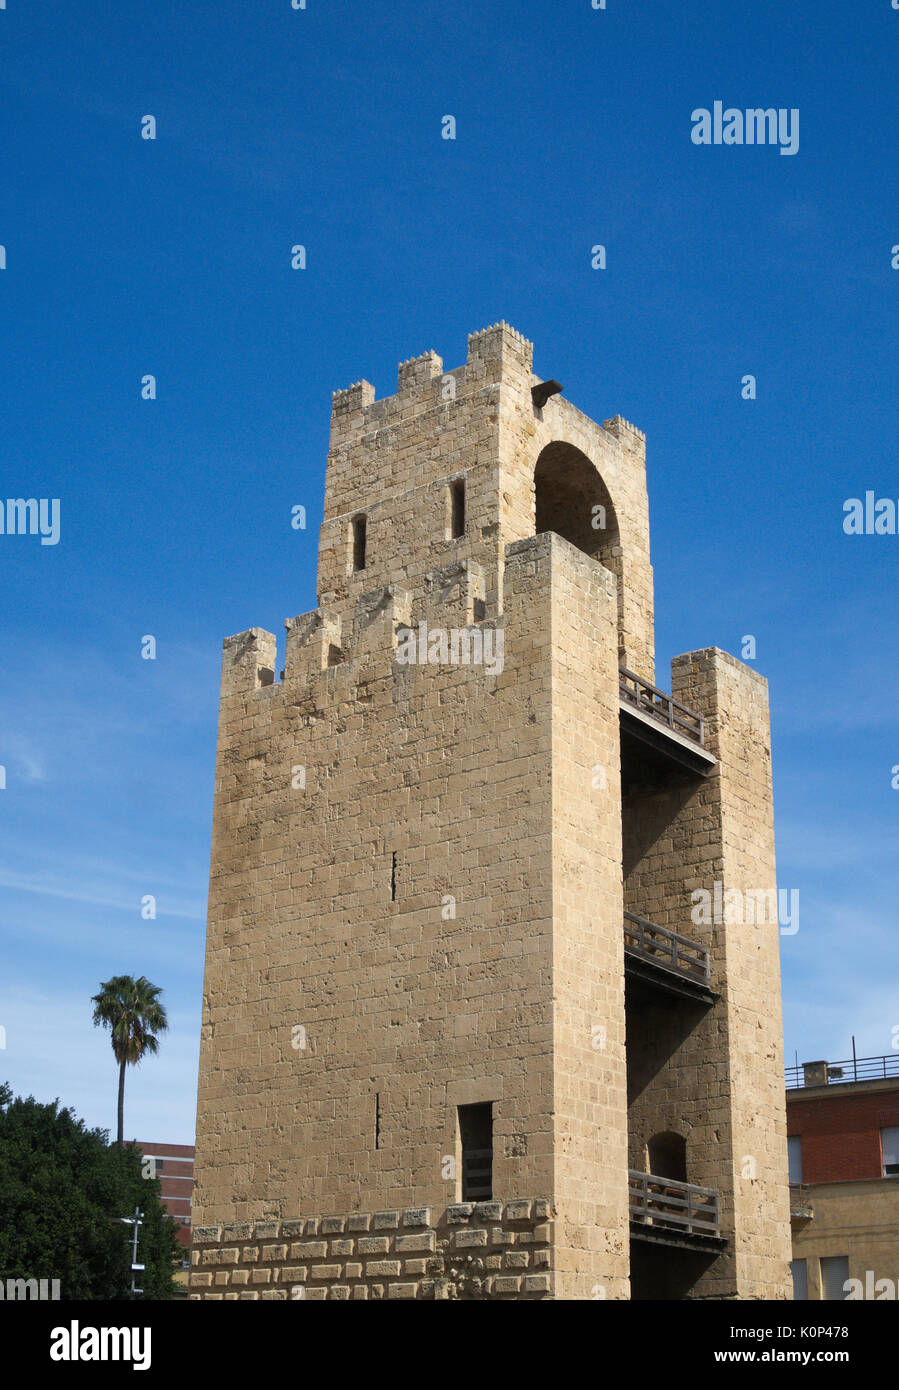 Le Mariano II ou la tour Torre di San Cristoforo tower,ou Porta Manna, Cagliari, Sardaigne, Italie Banque D'Images